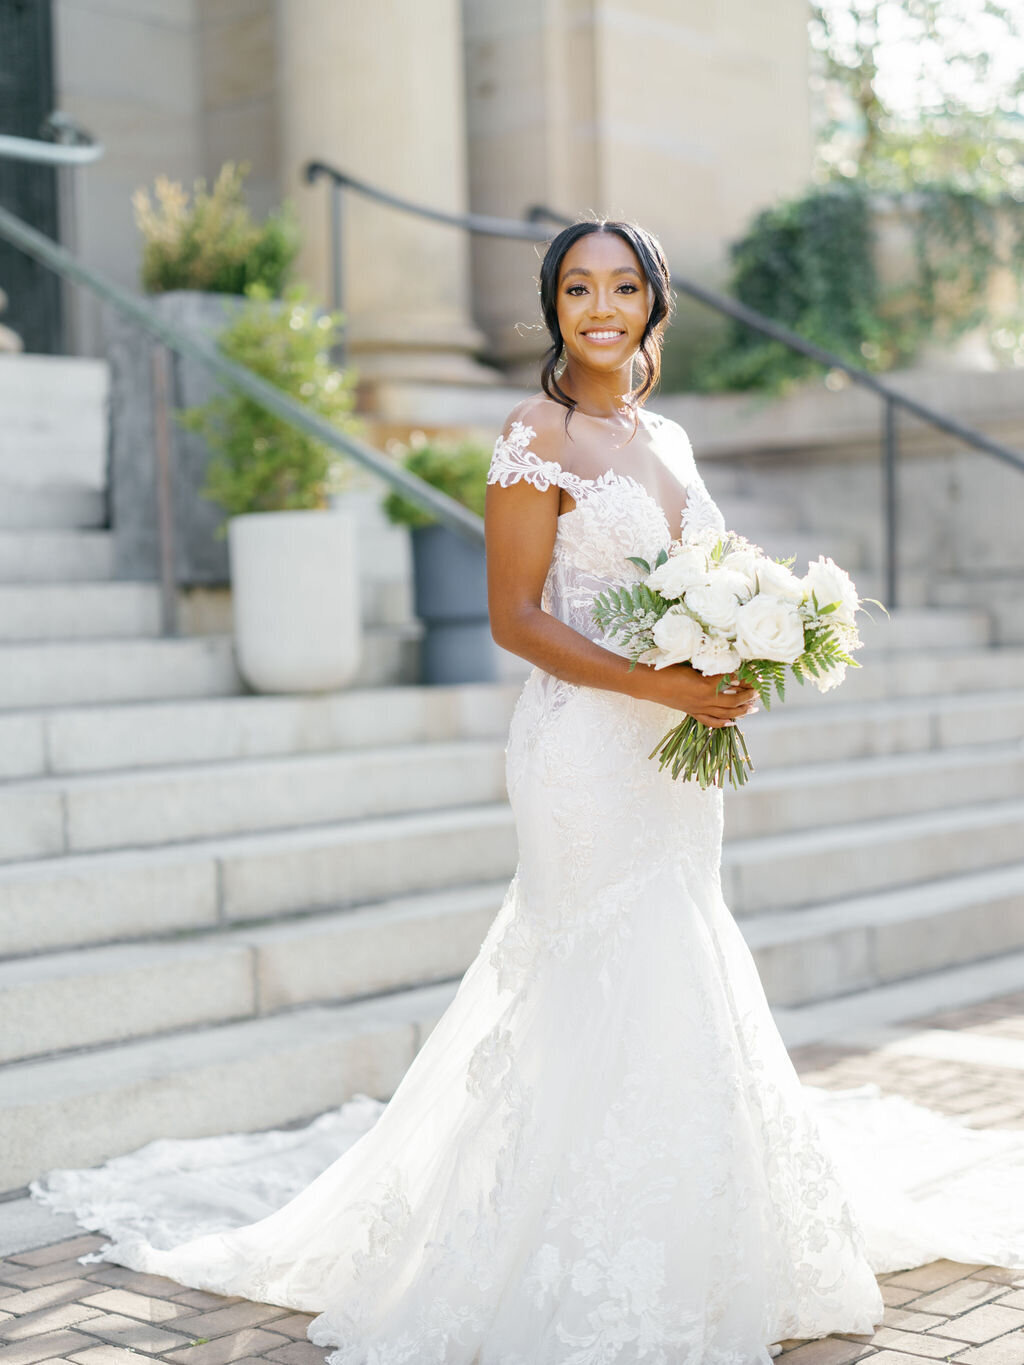 Jayne Heir Weddings and Events - Washington DC Metropolitan Area Wedding and Event Planner - Modern, Stylish, Custom, Top, Best Photo - 31